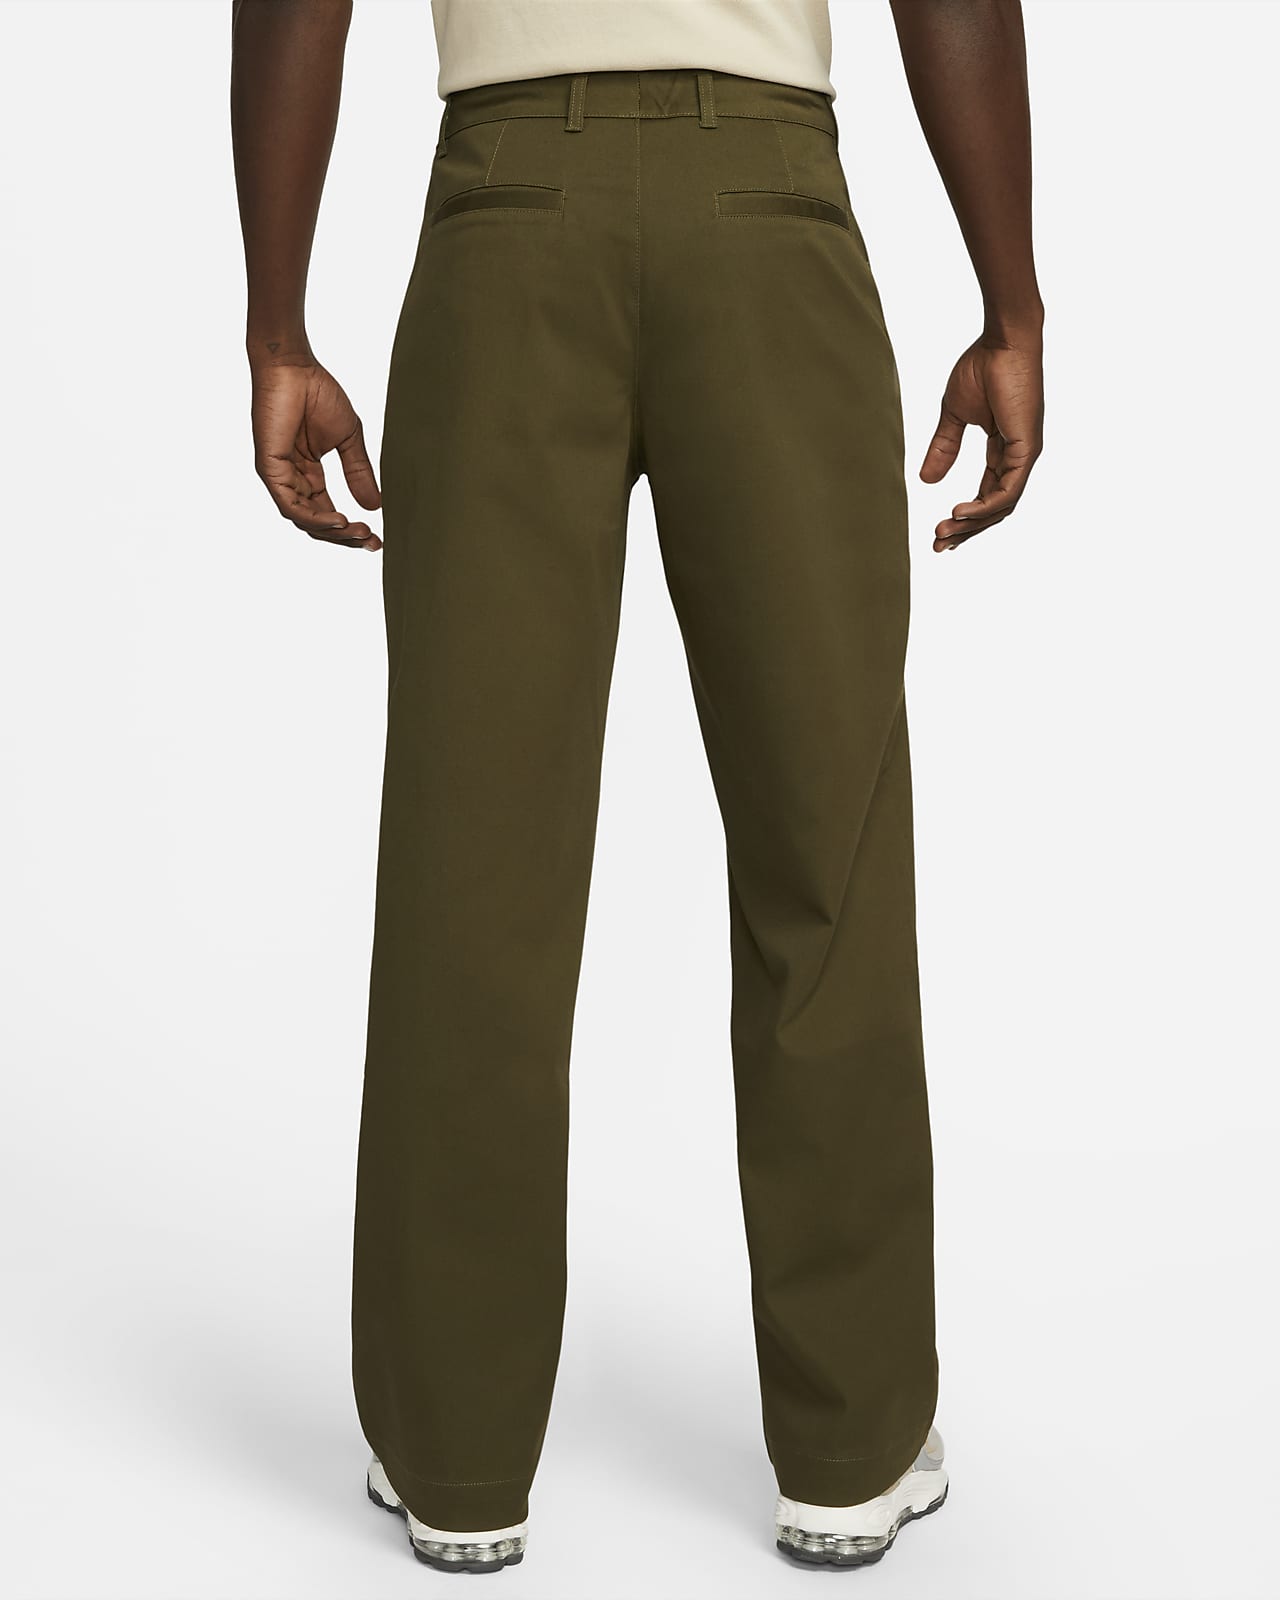 Adaptado dueño Scully Nike Life Men's Unlined Cotton Chino Pants. Nike.com